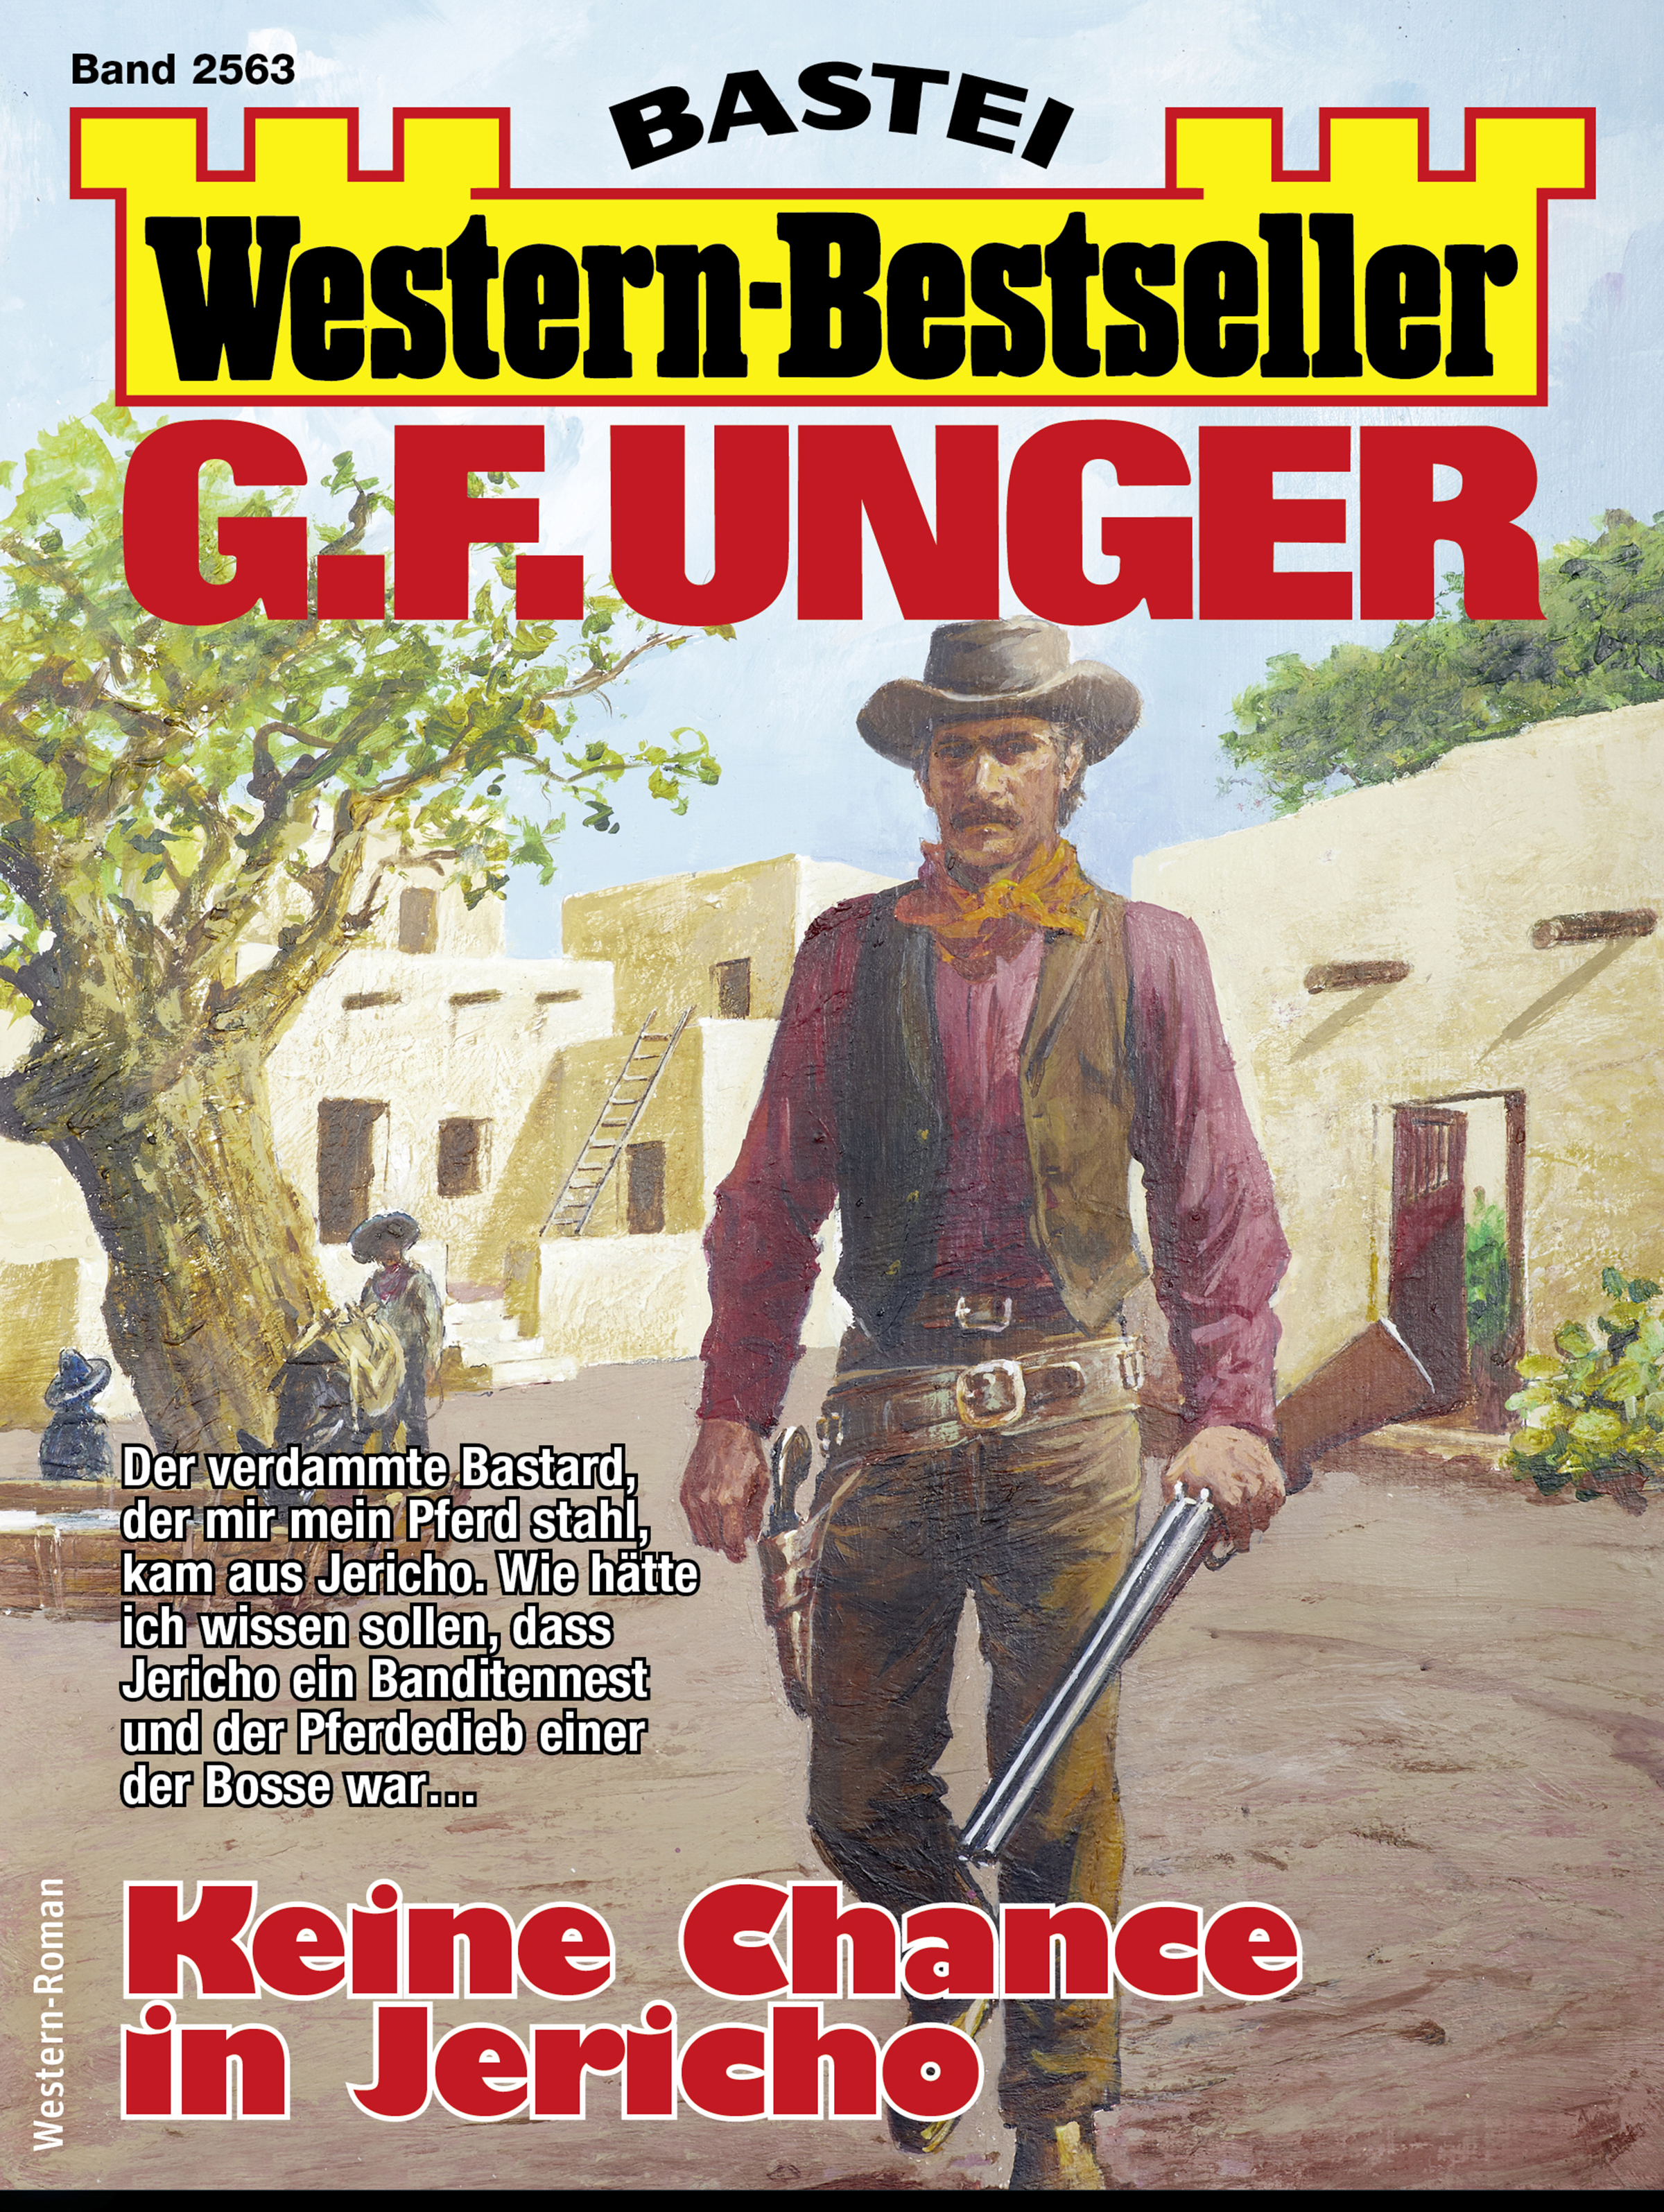 G. F. Unger Western-Bestseller 2563